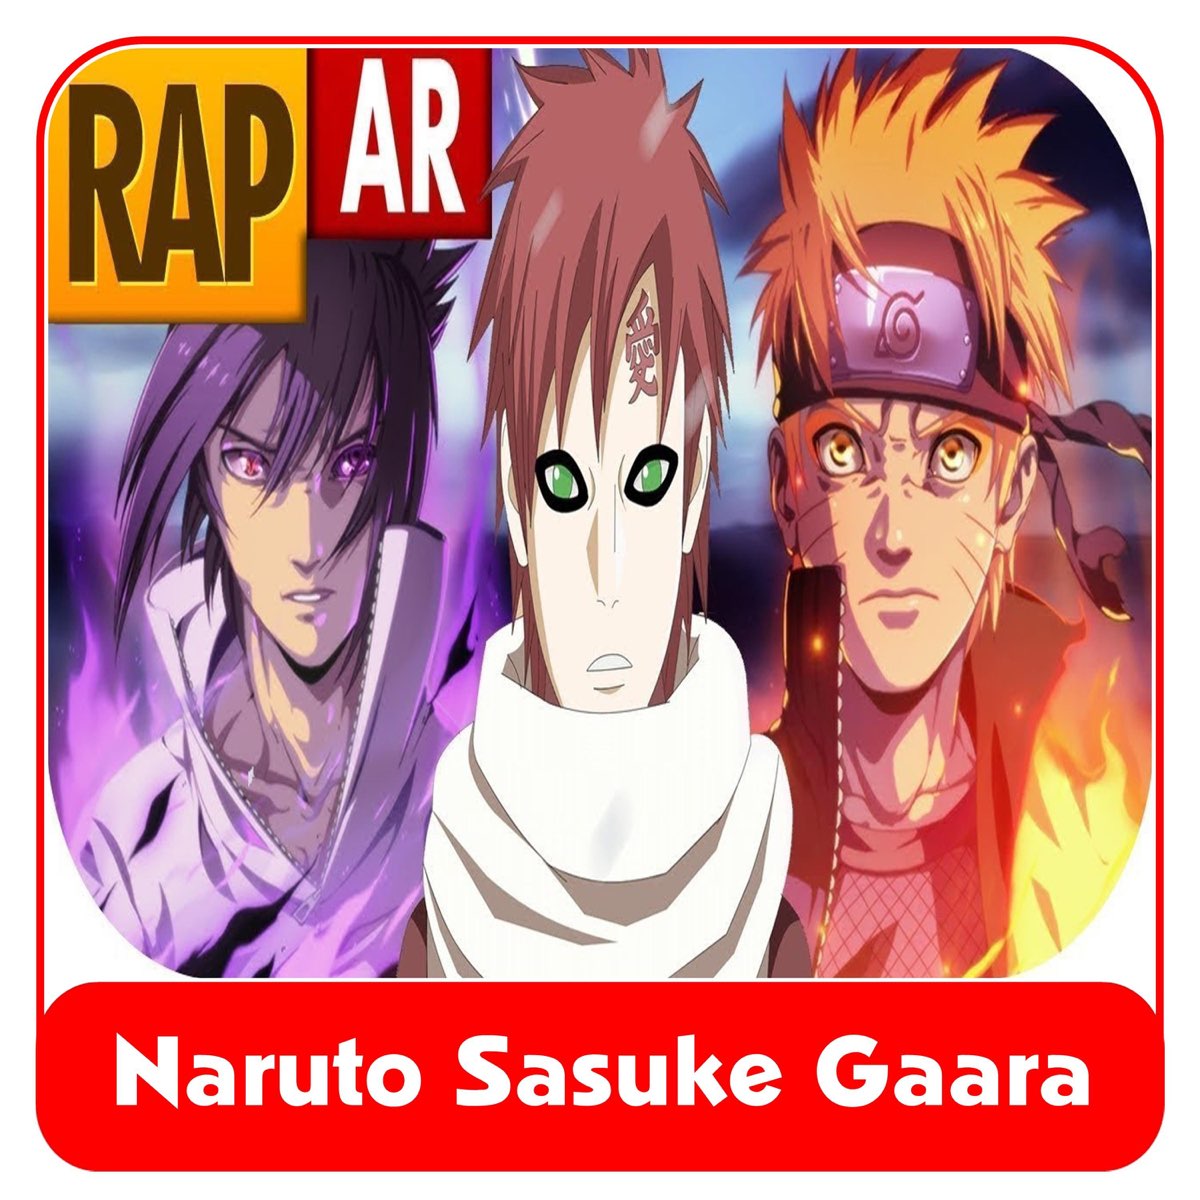 Nagato Uzumaki Naruto Shippuden Boruto Rap Do Tauz  Nagato Rinnegan  Transparent PNG  1024x877  Free Download on NicePNG